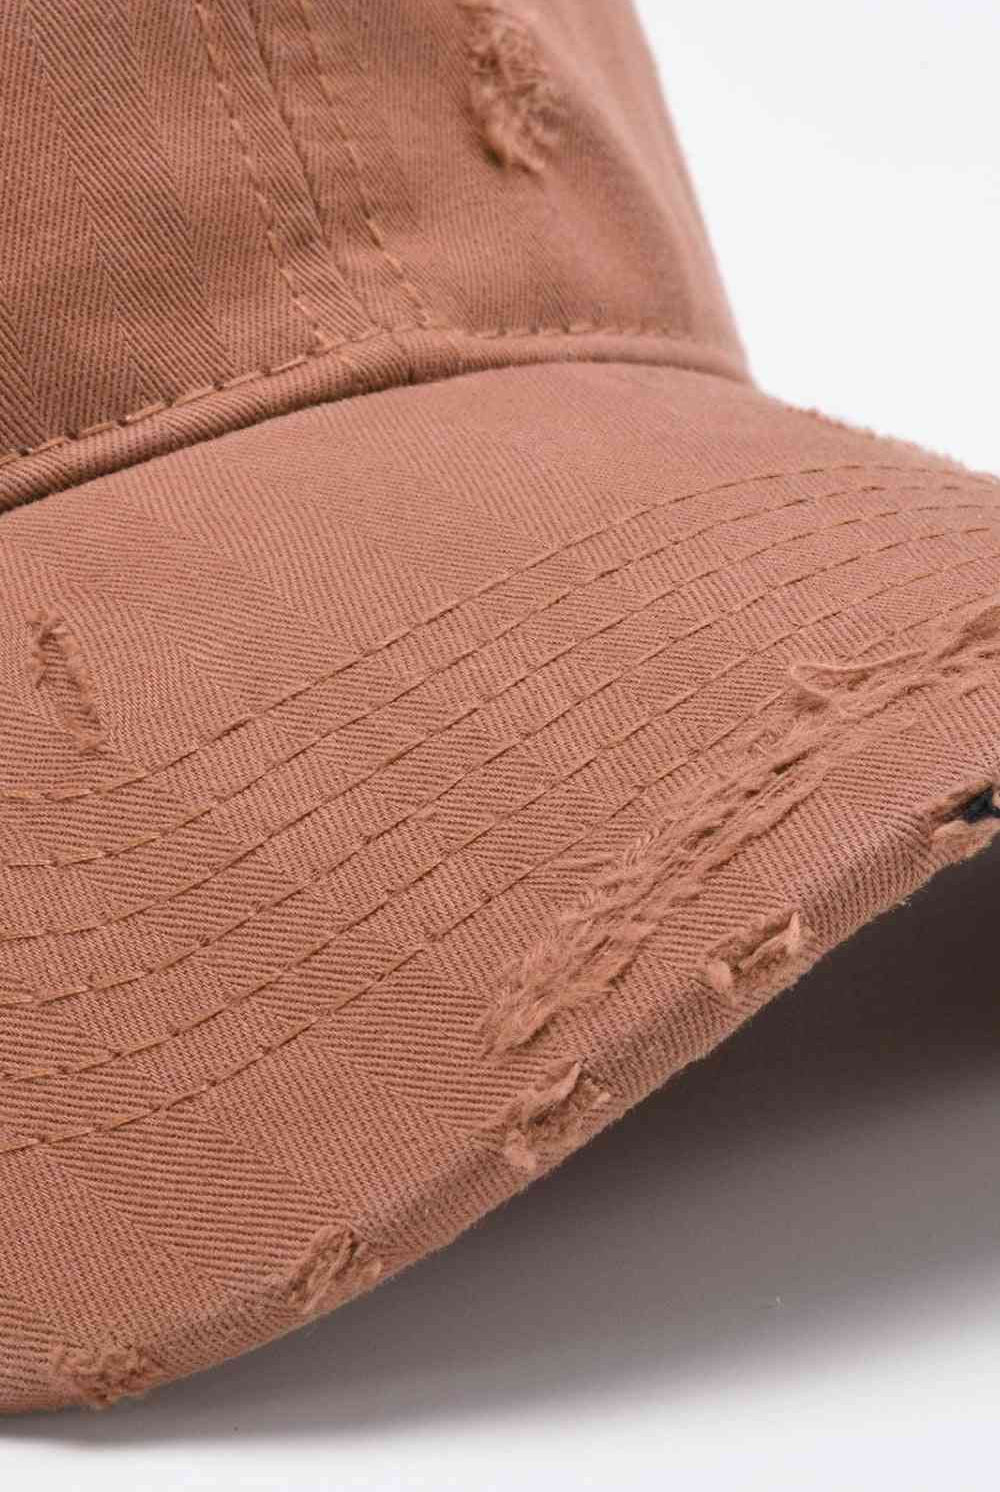 Rosy Brown Basic Distressed Adjustable Baseball Cap Hats